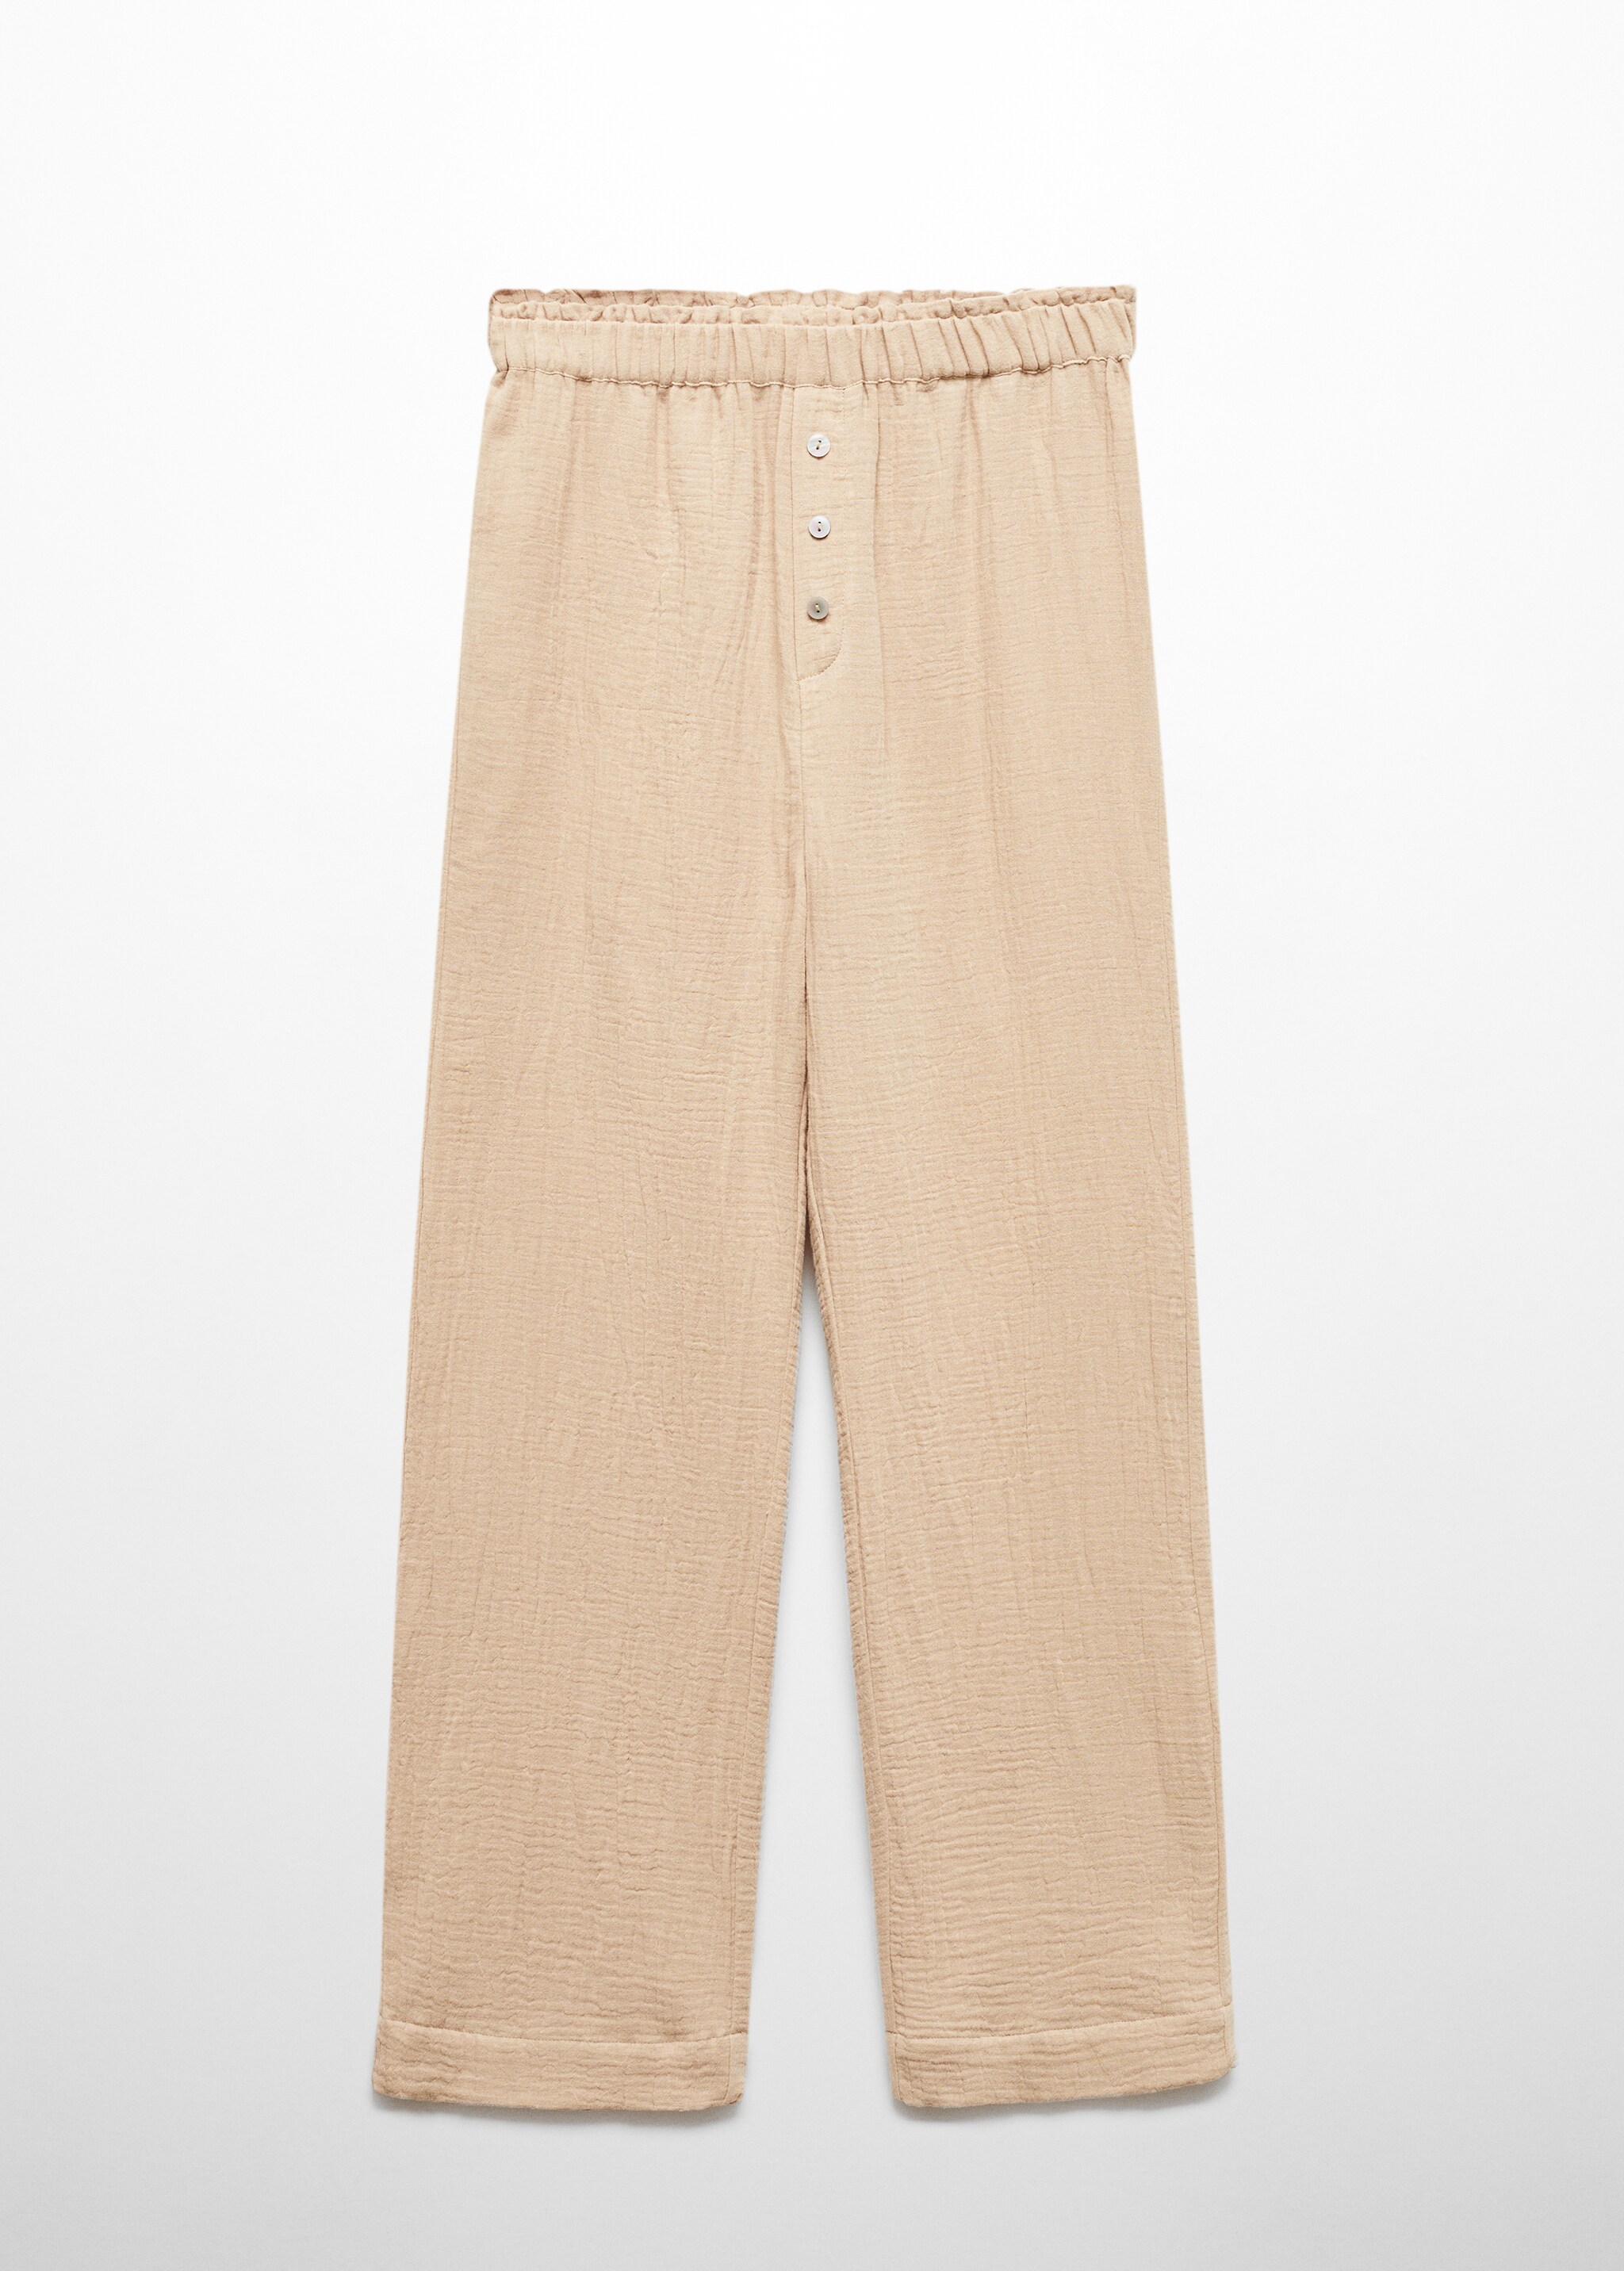 Pamuklu tül pijama pantolon - Modelsiz ürün